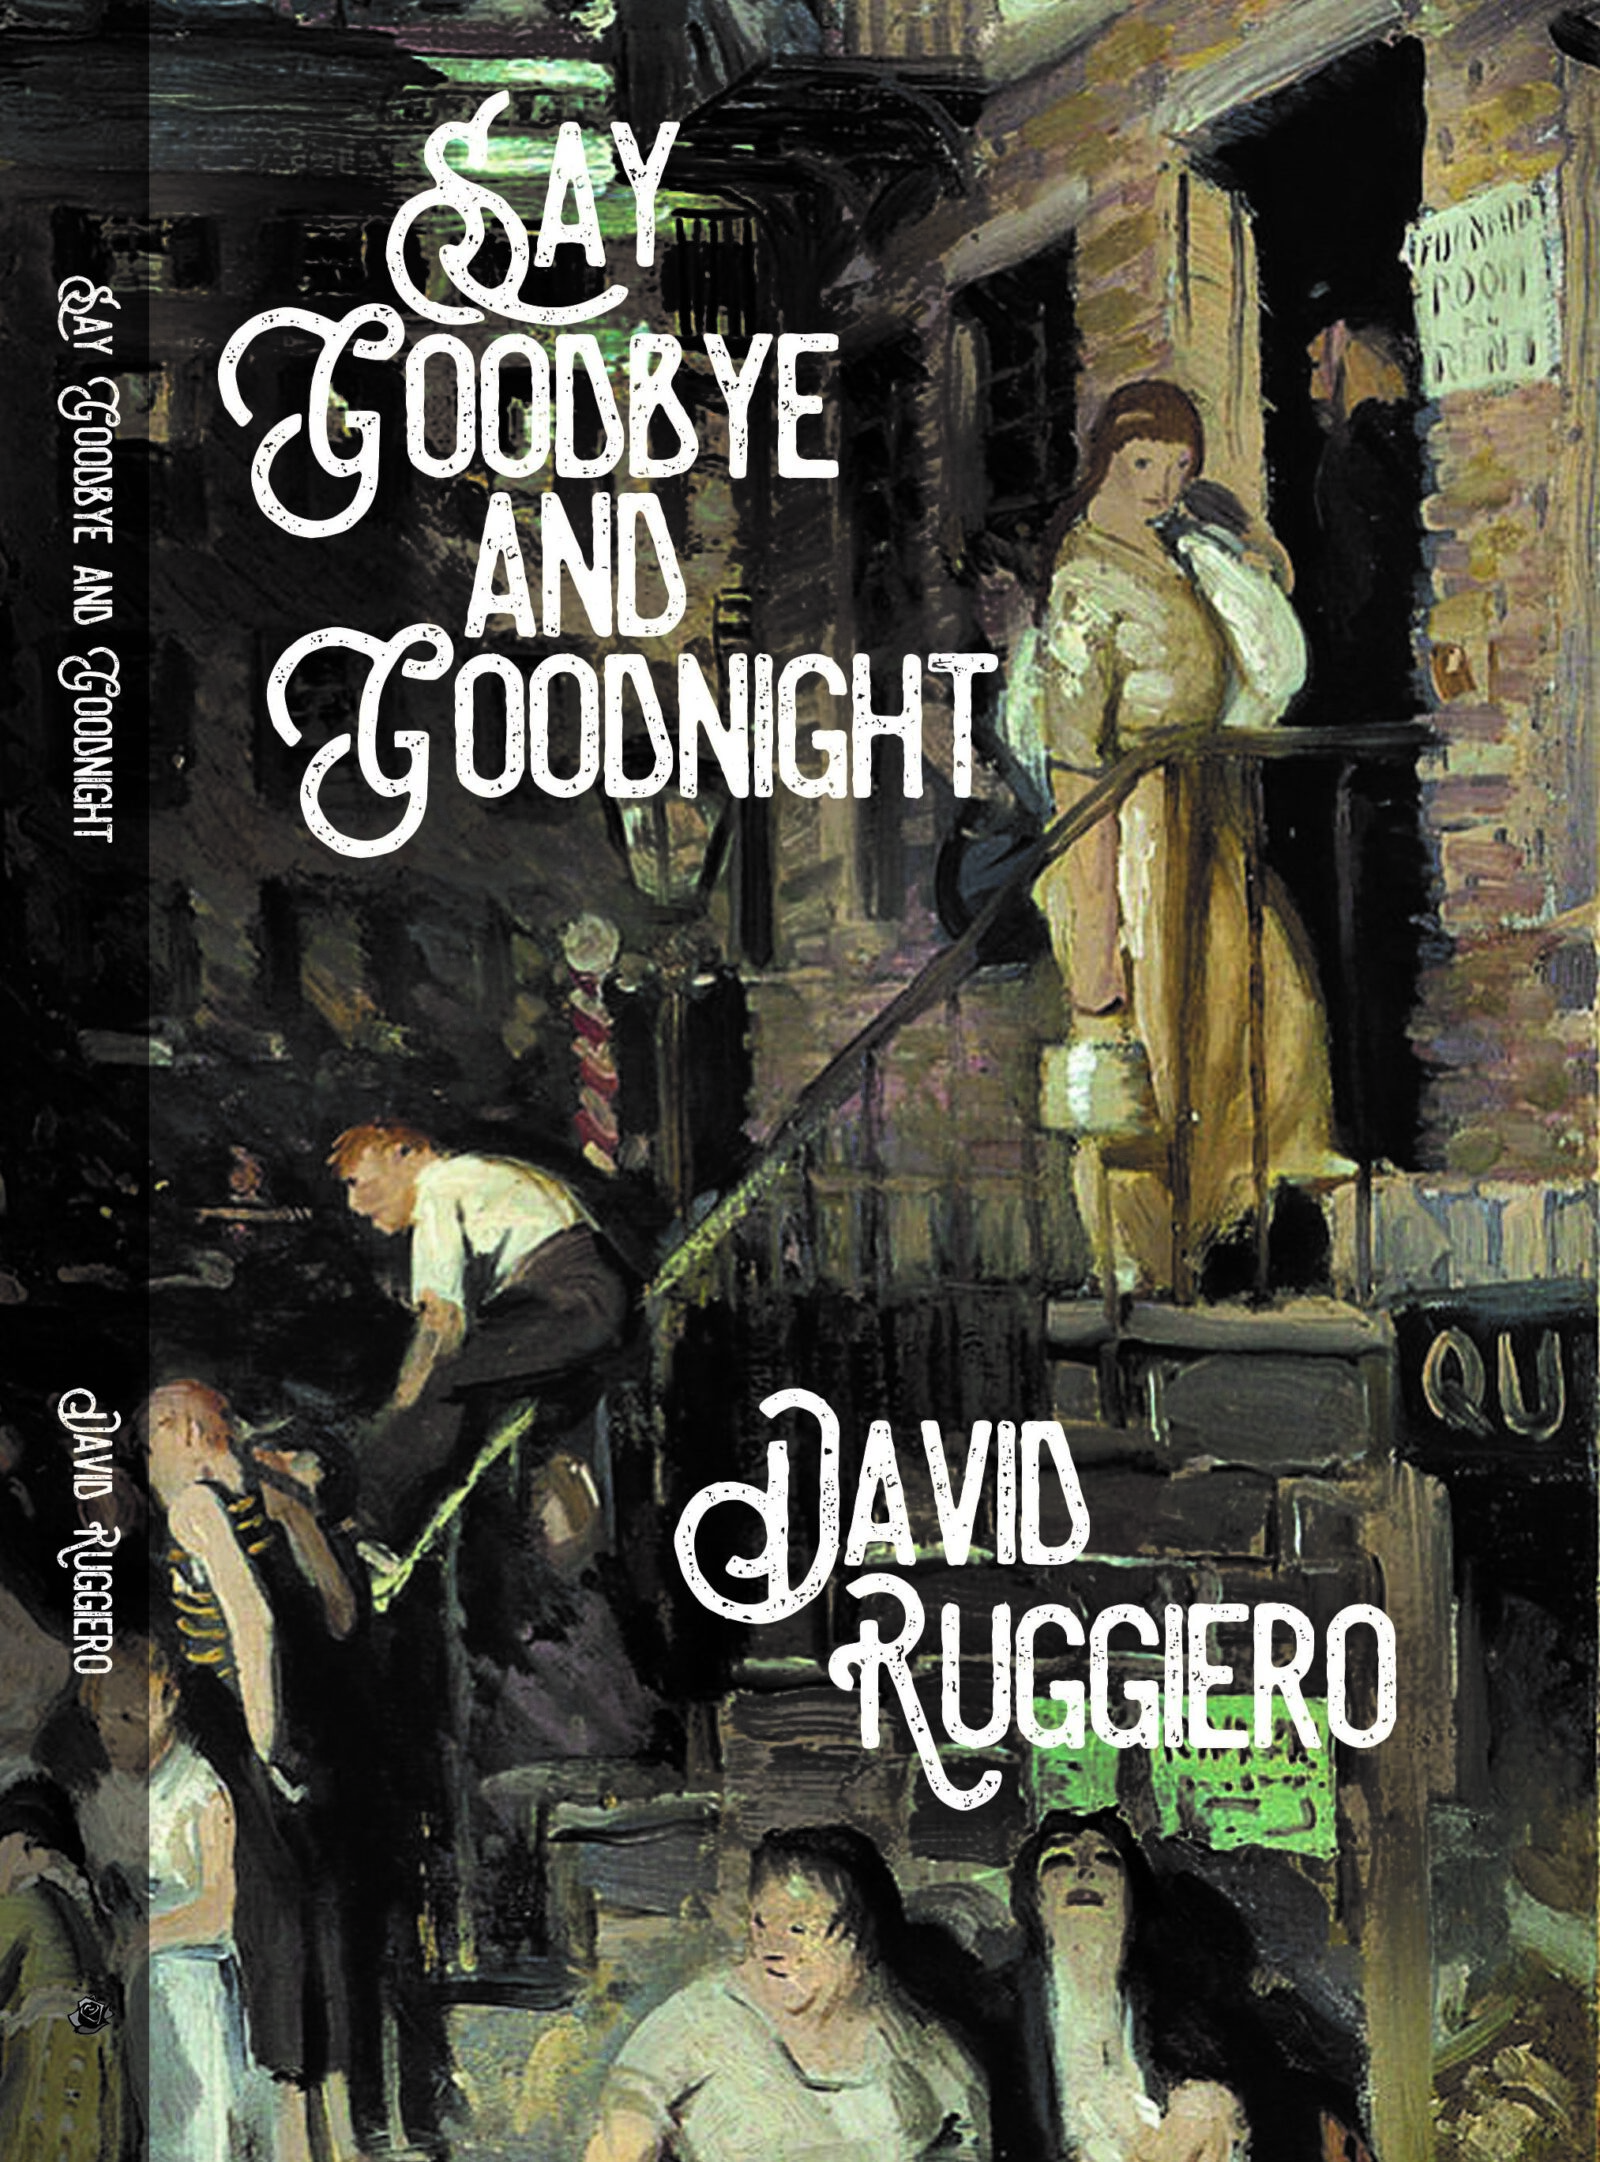 David Ruggerio's new novel, Say Goodbye and Goodnight